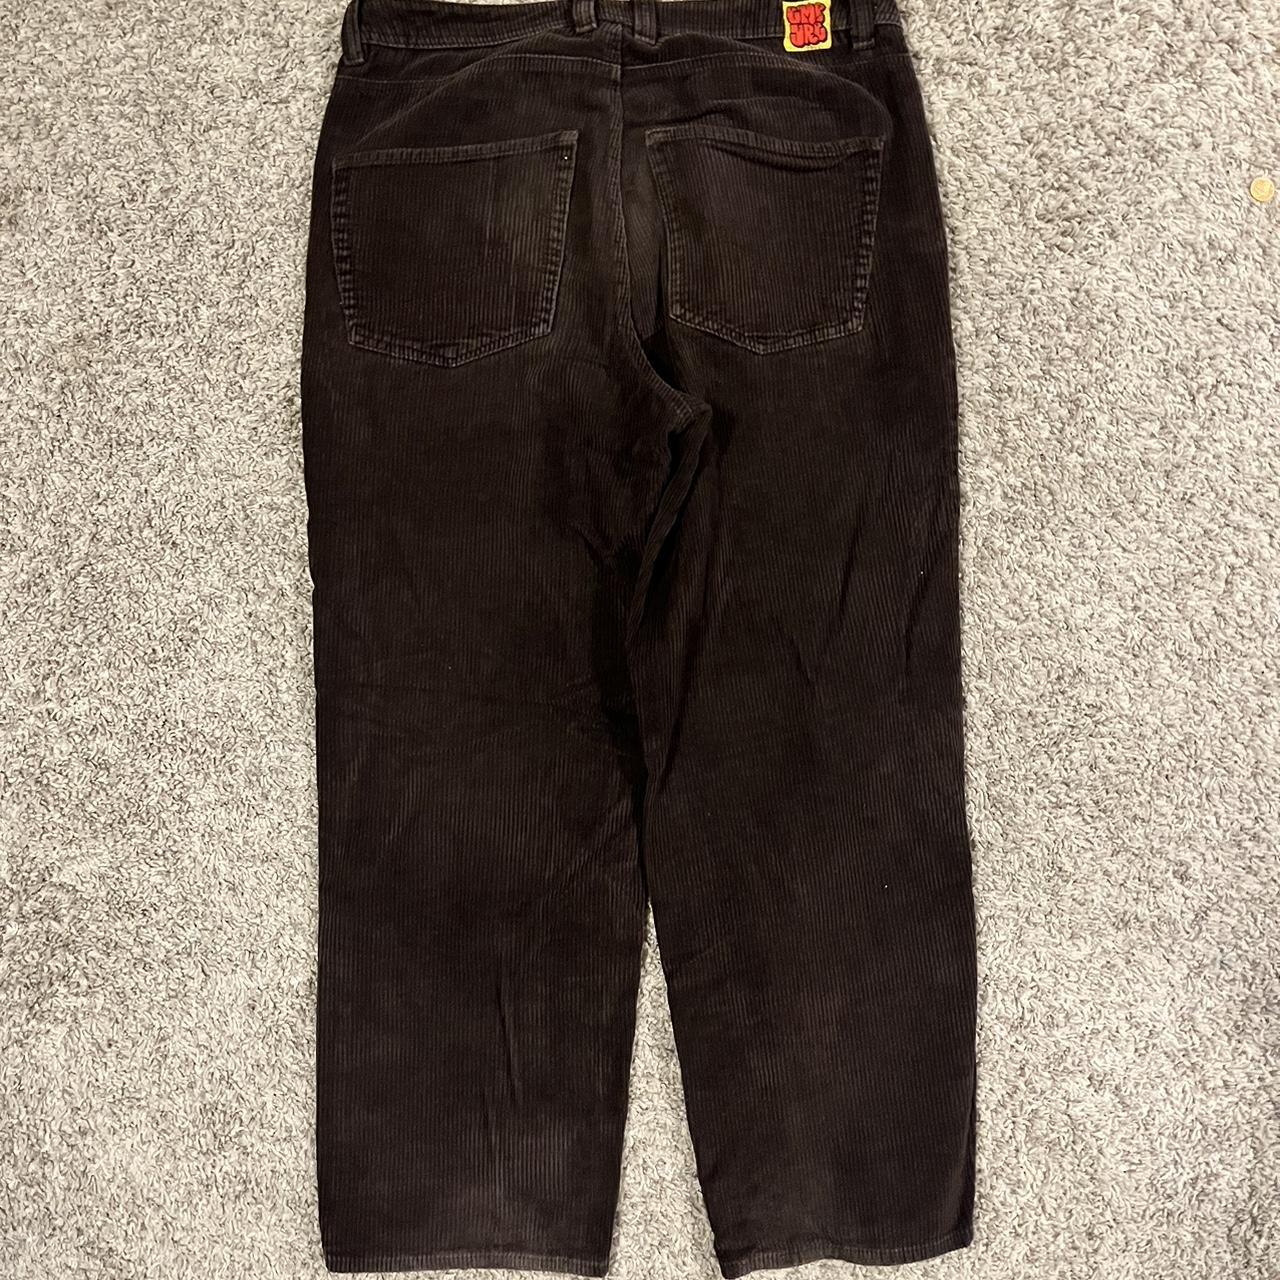 Empyre Baggy Corduroy Jeans Size 32 Perfect... - Depop